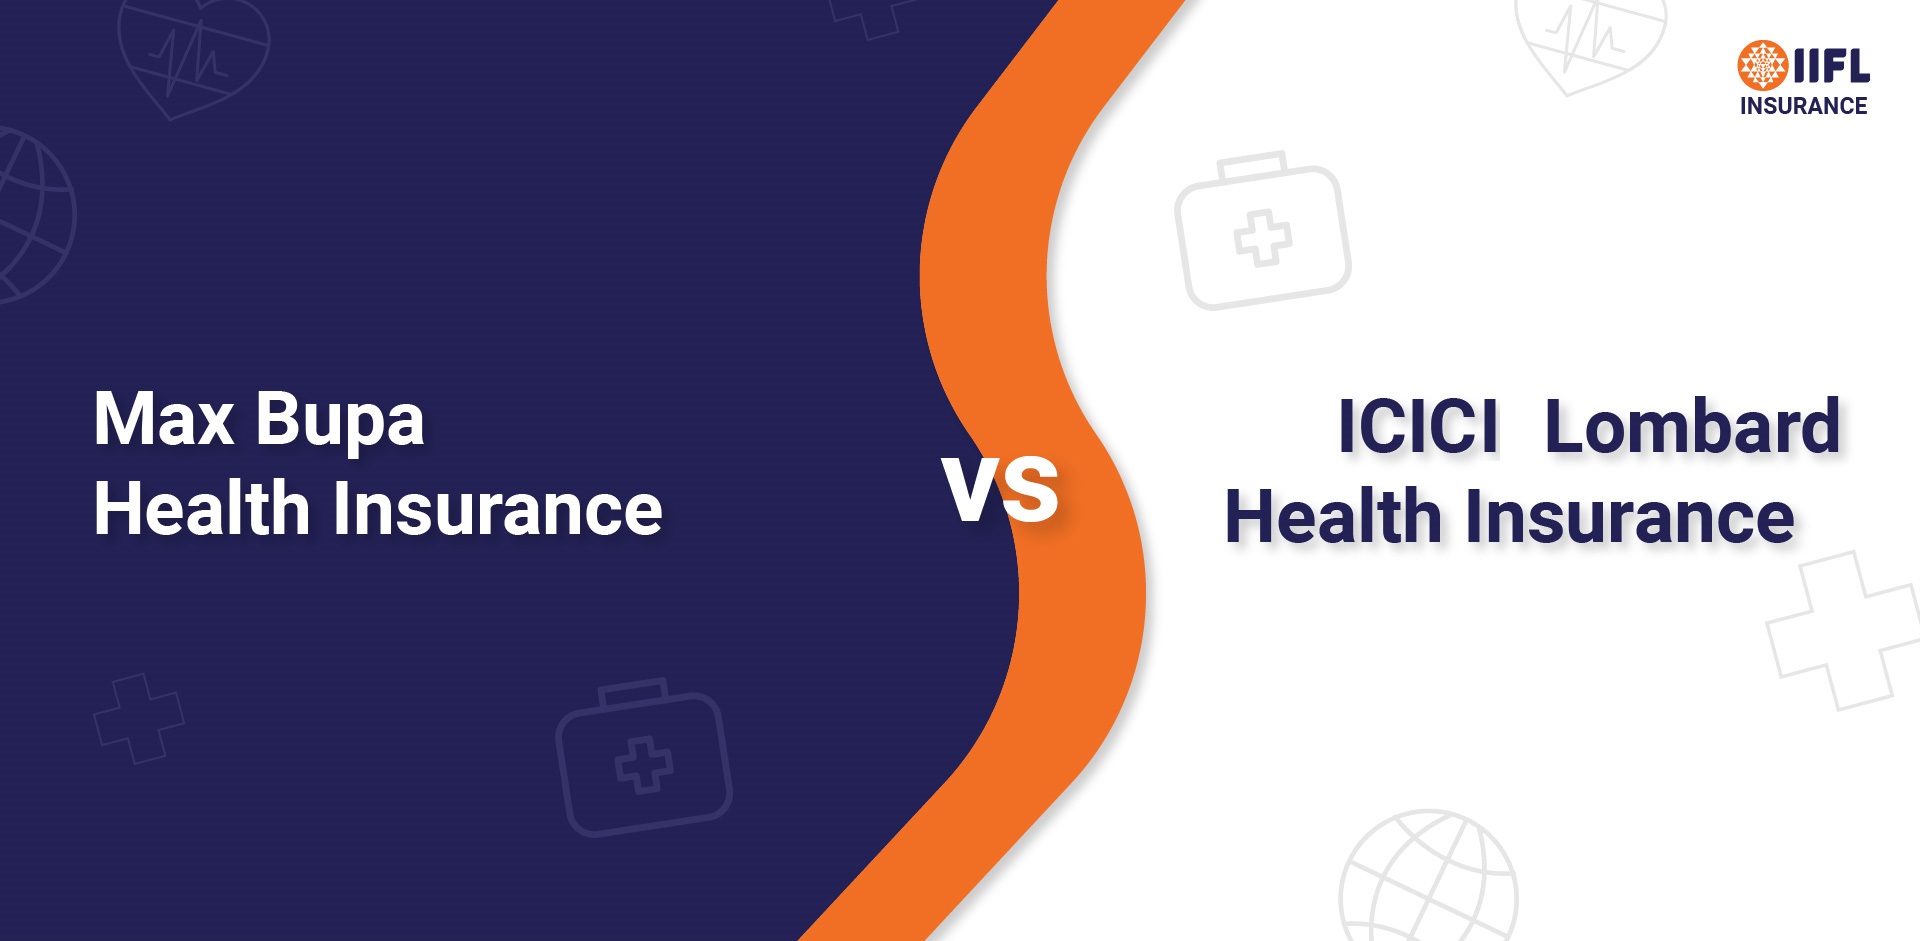 Niva Bupa (Max Bupa) Health Insurance vs ICICI Lombard Health Insurance